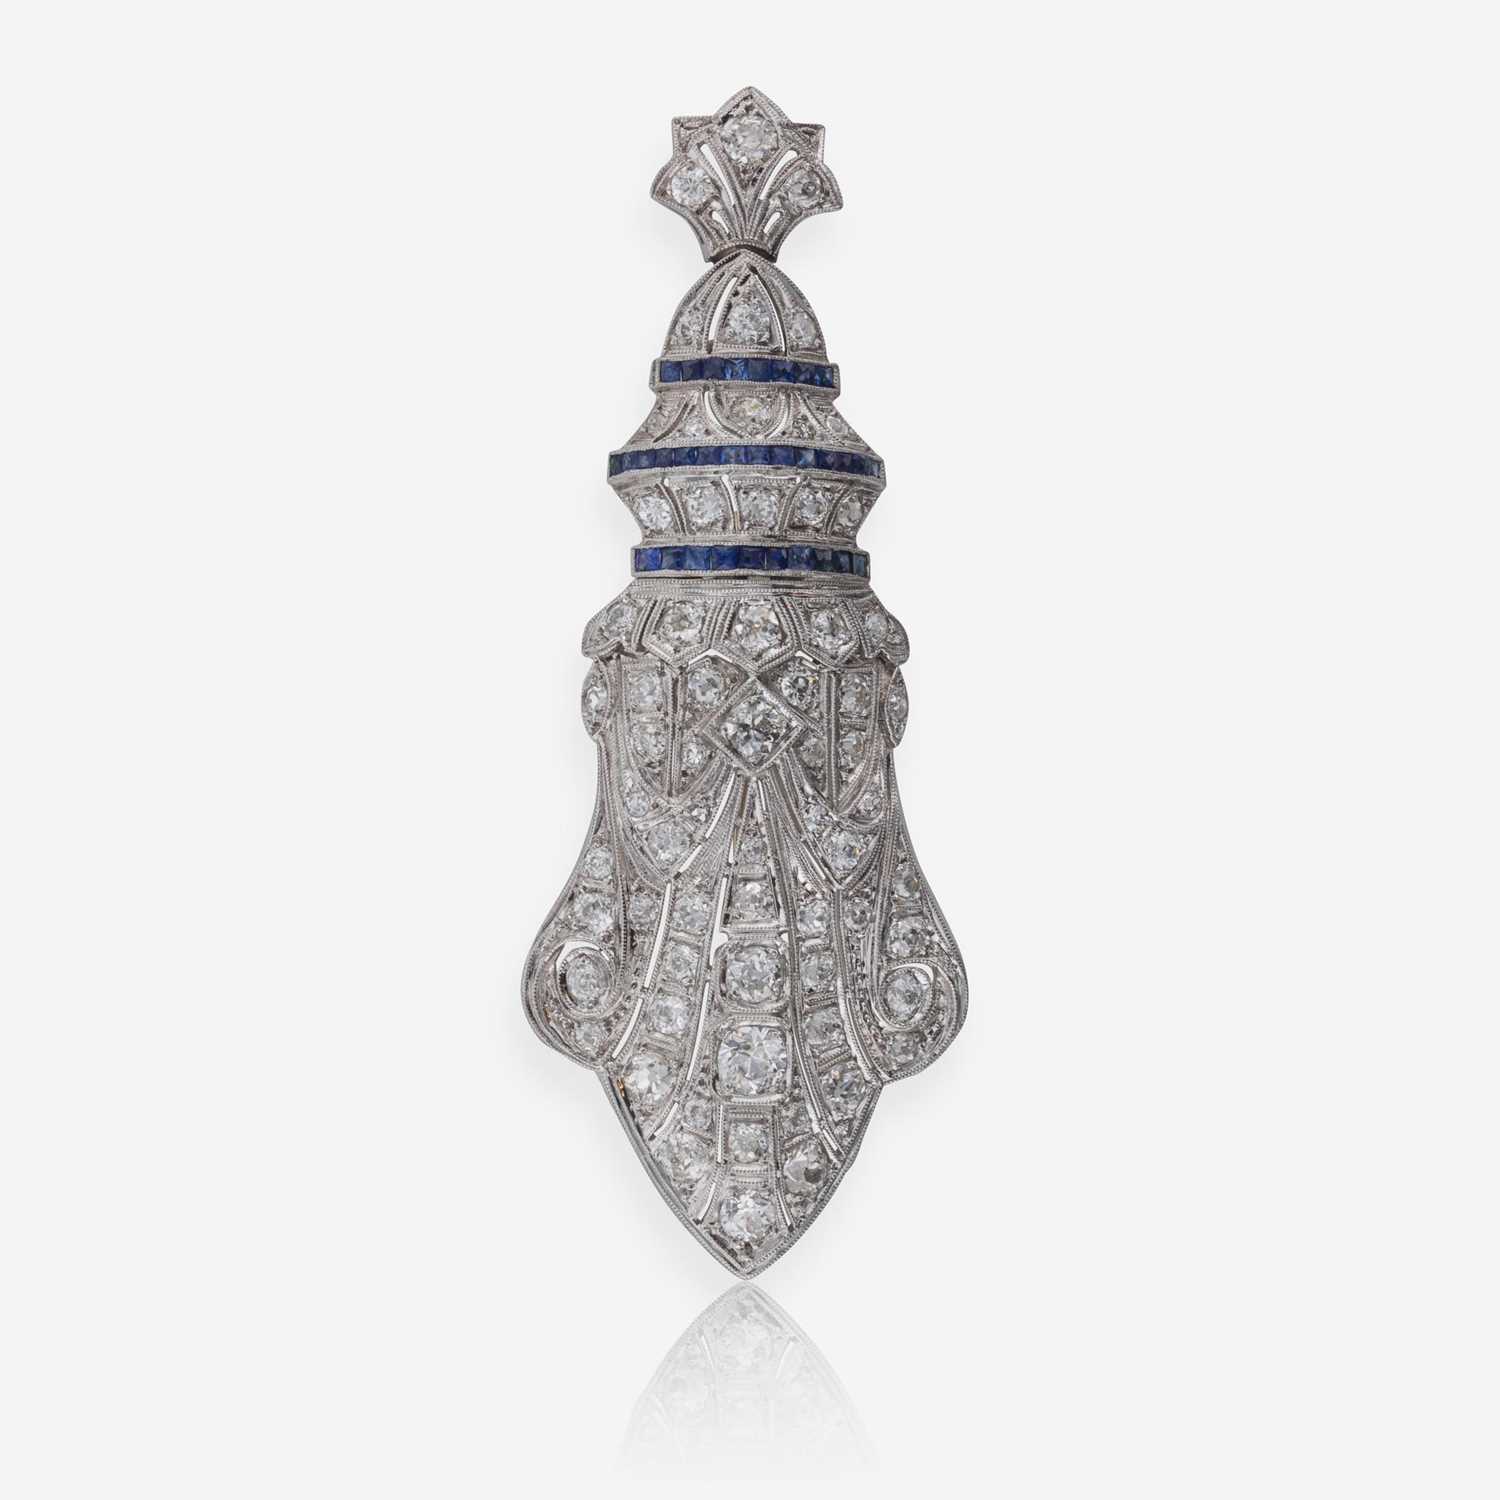 Lot 15 - Art Deco Diamond and Sapphire Brooch